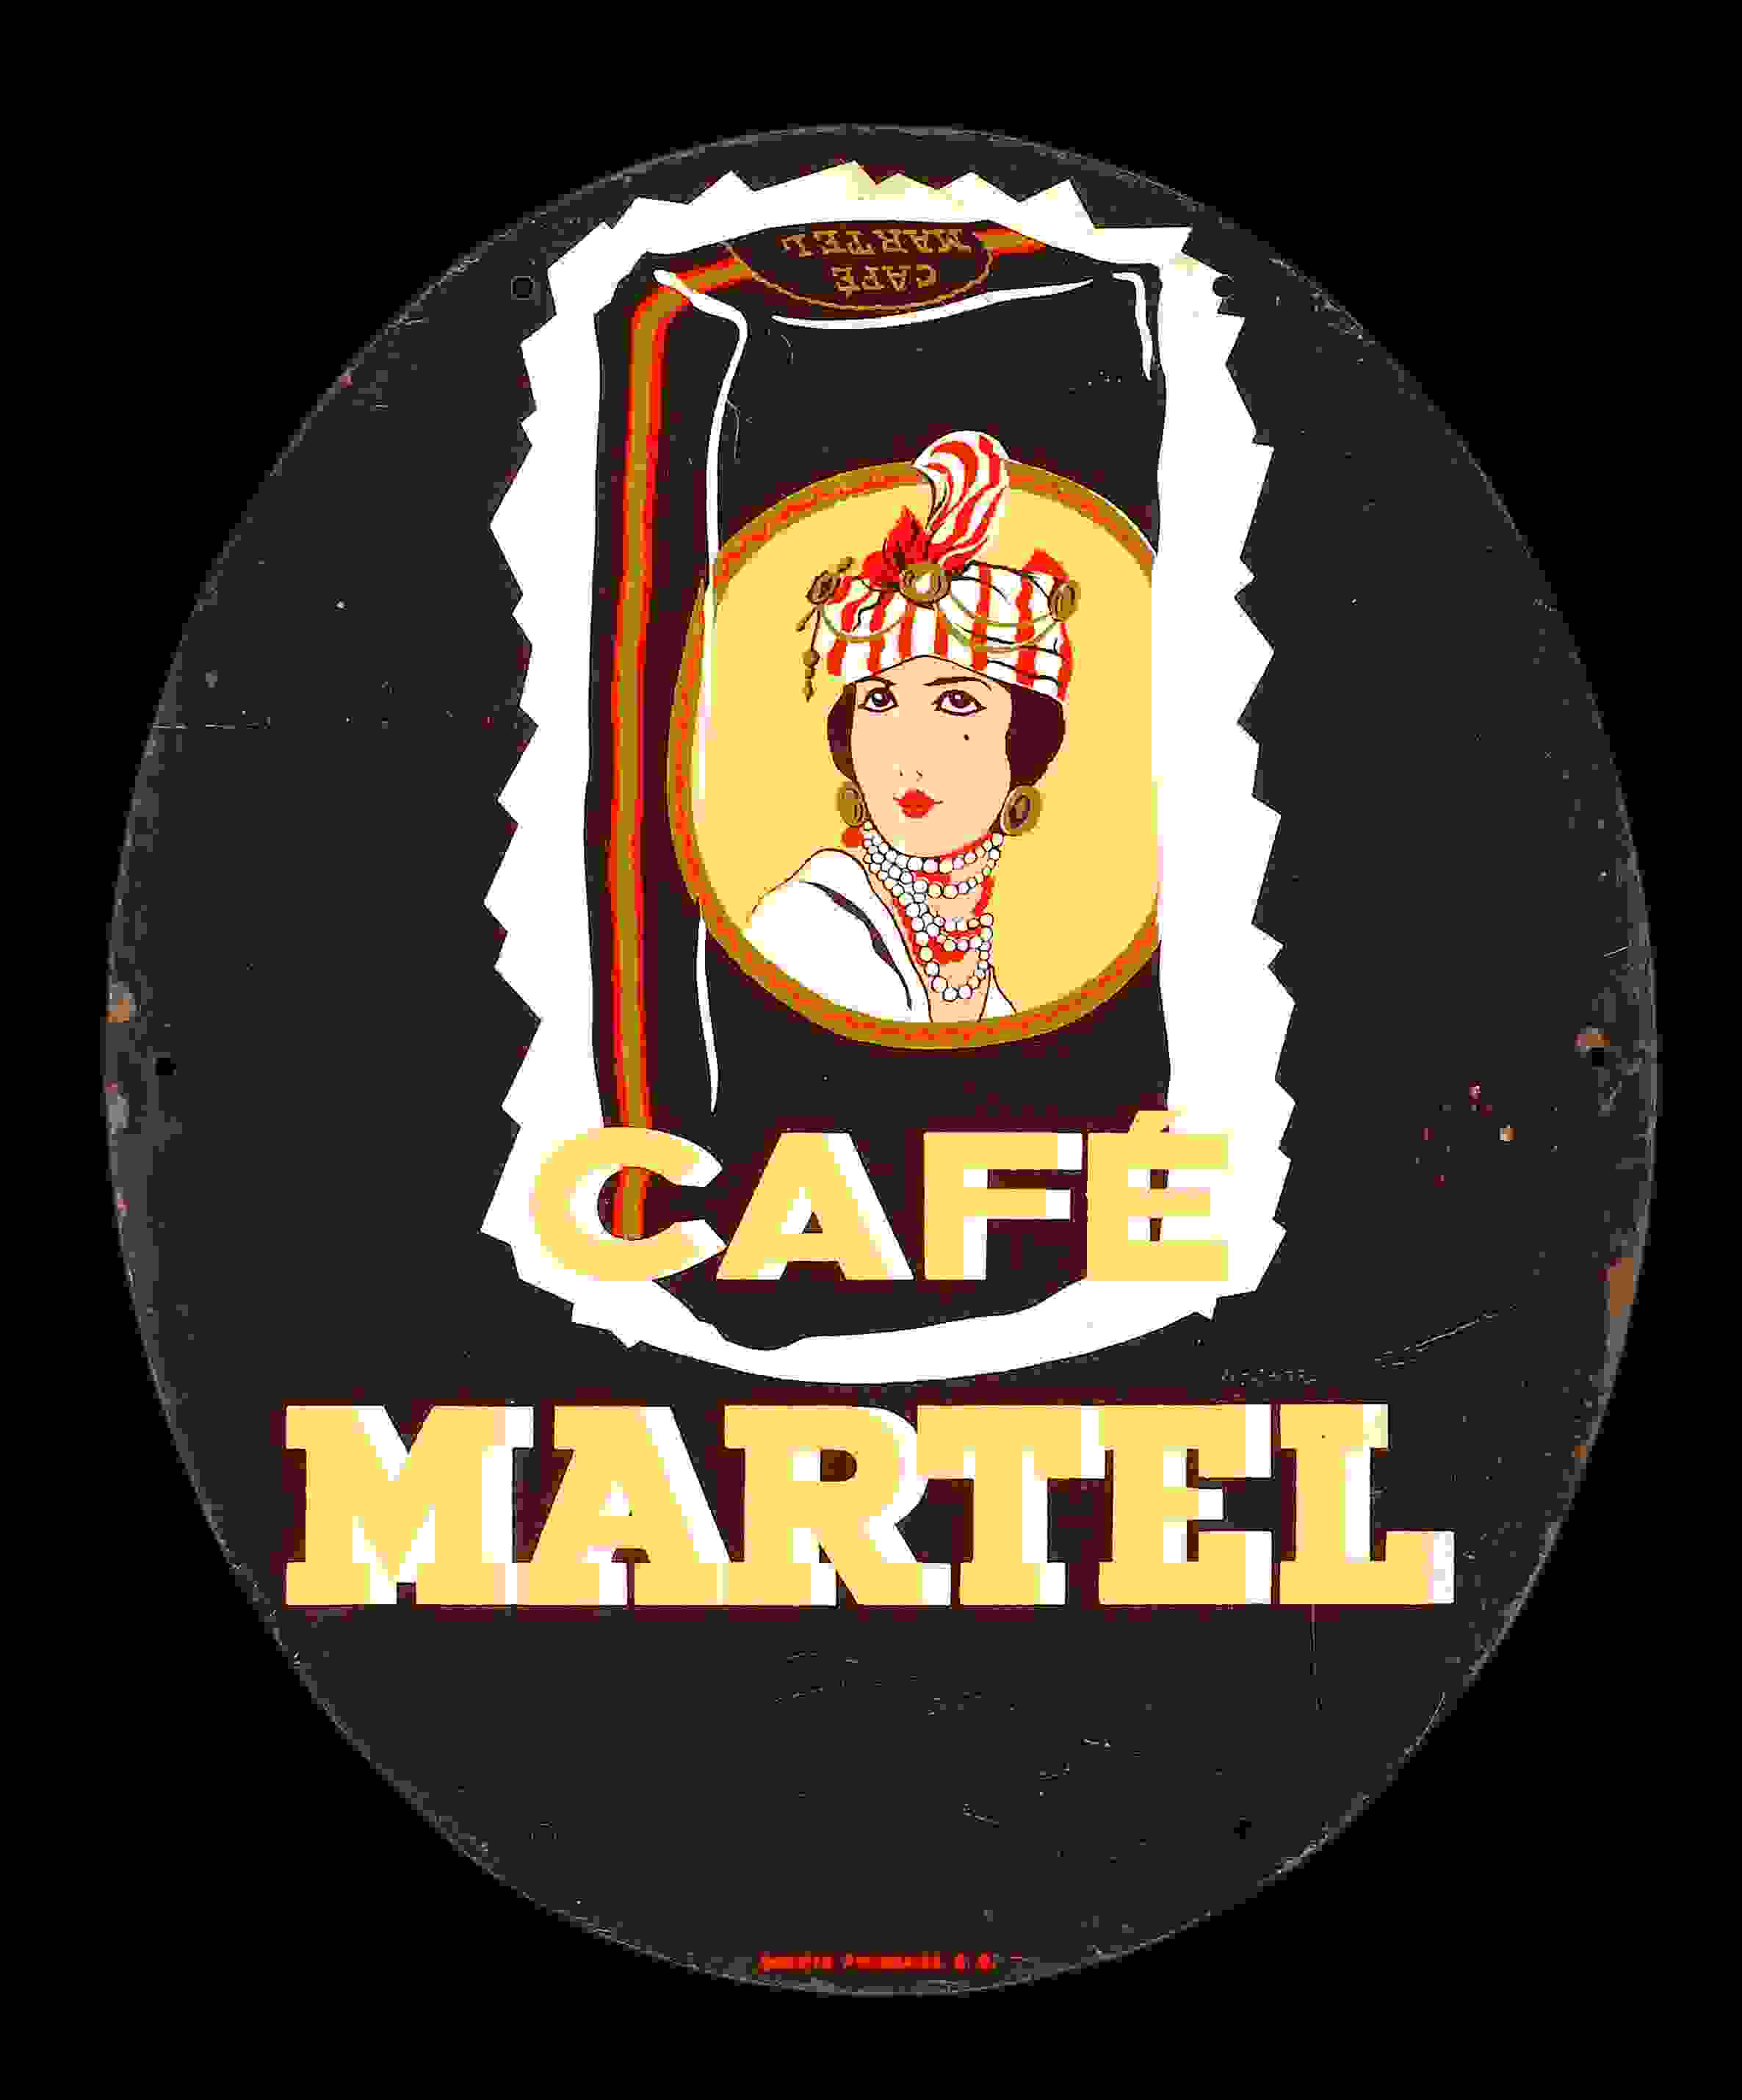 Café Martel 